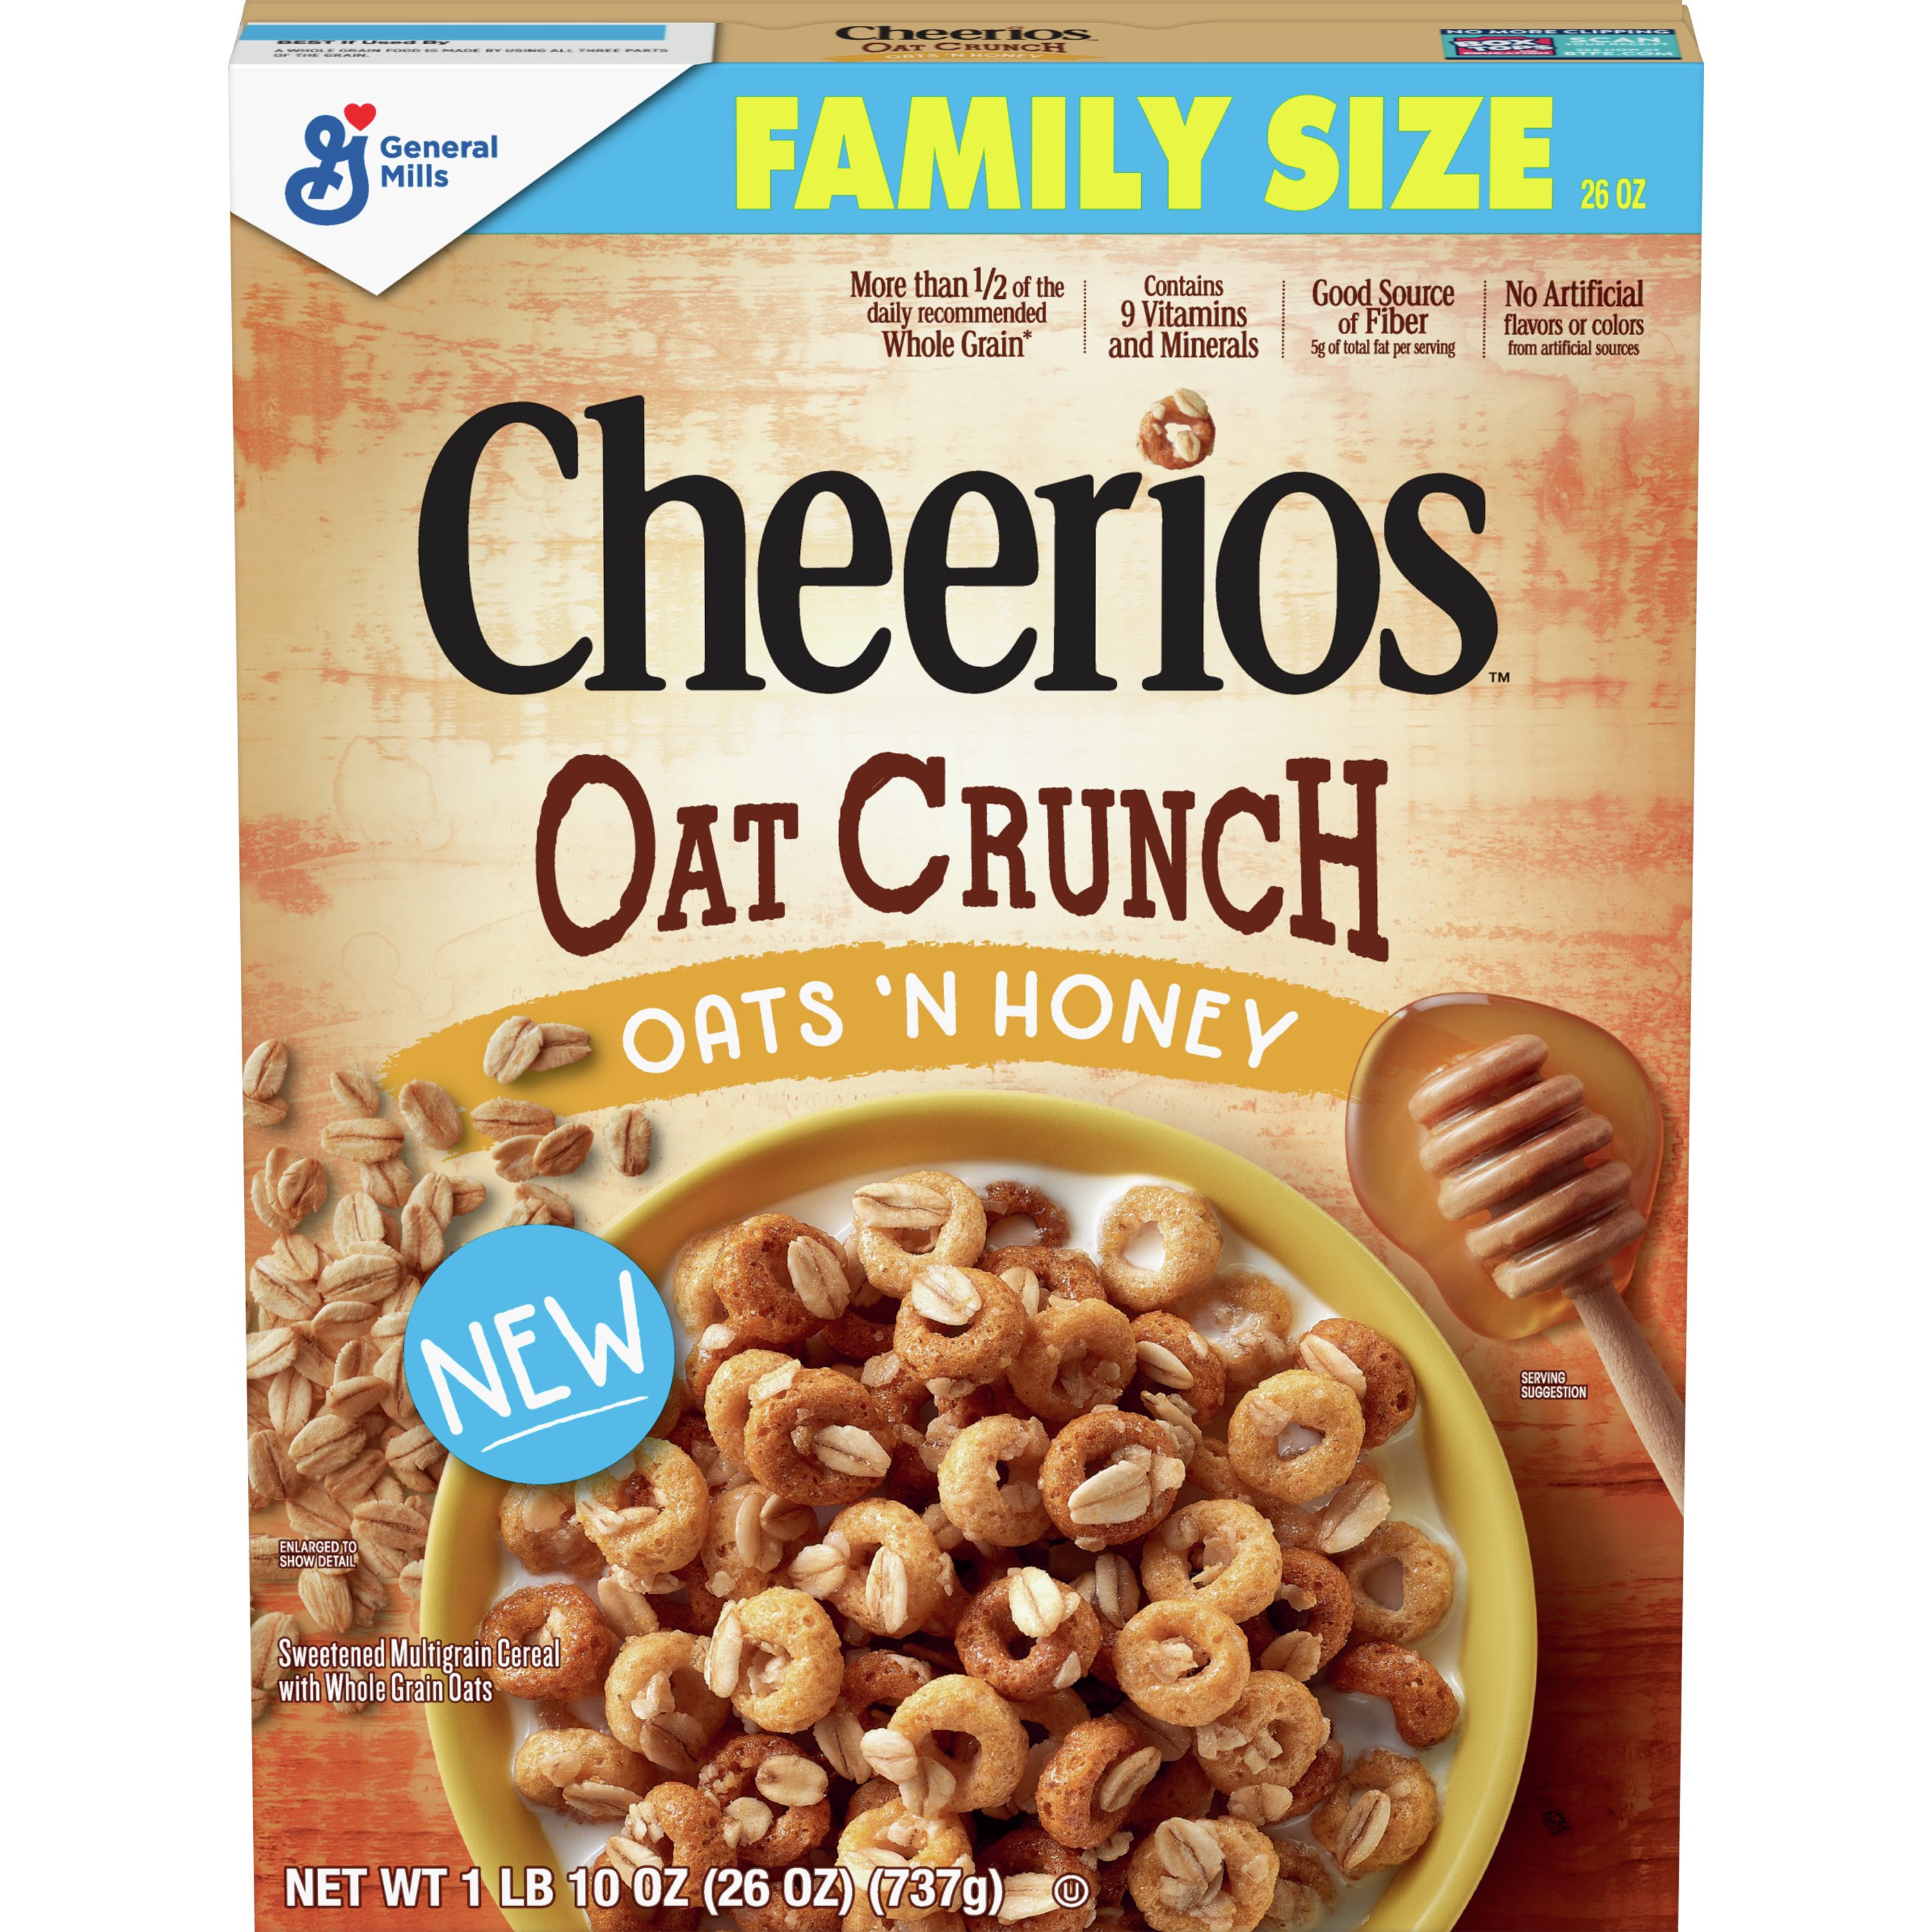 https://www.cerealously.net/wp-content/uploads/2019/11/cheerios-oat-crunch-honey-cereal.jpeg